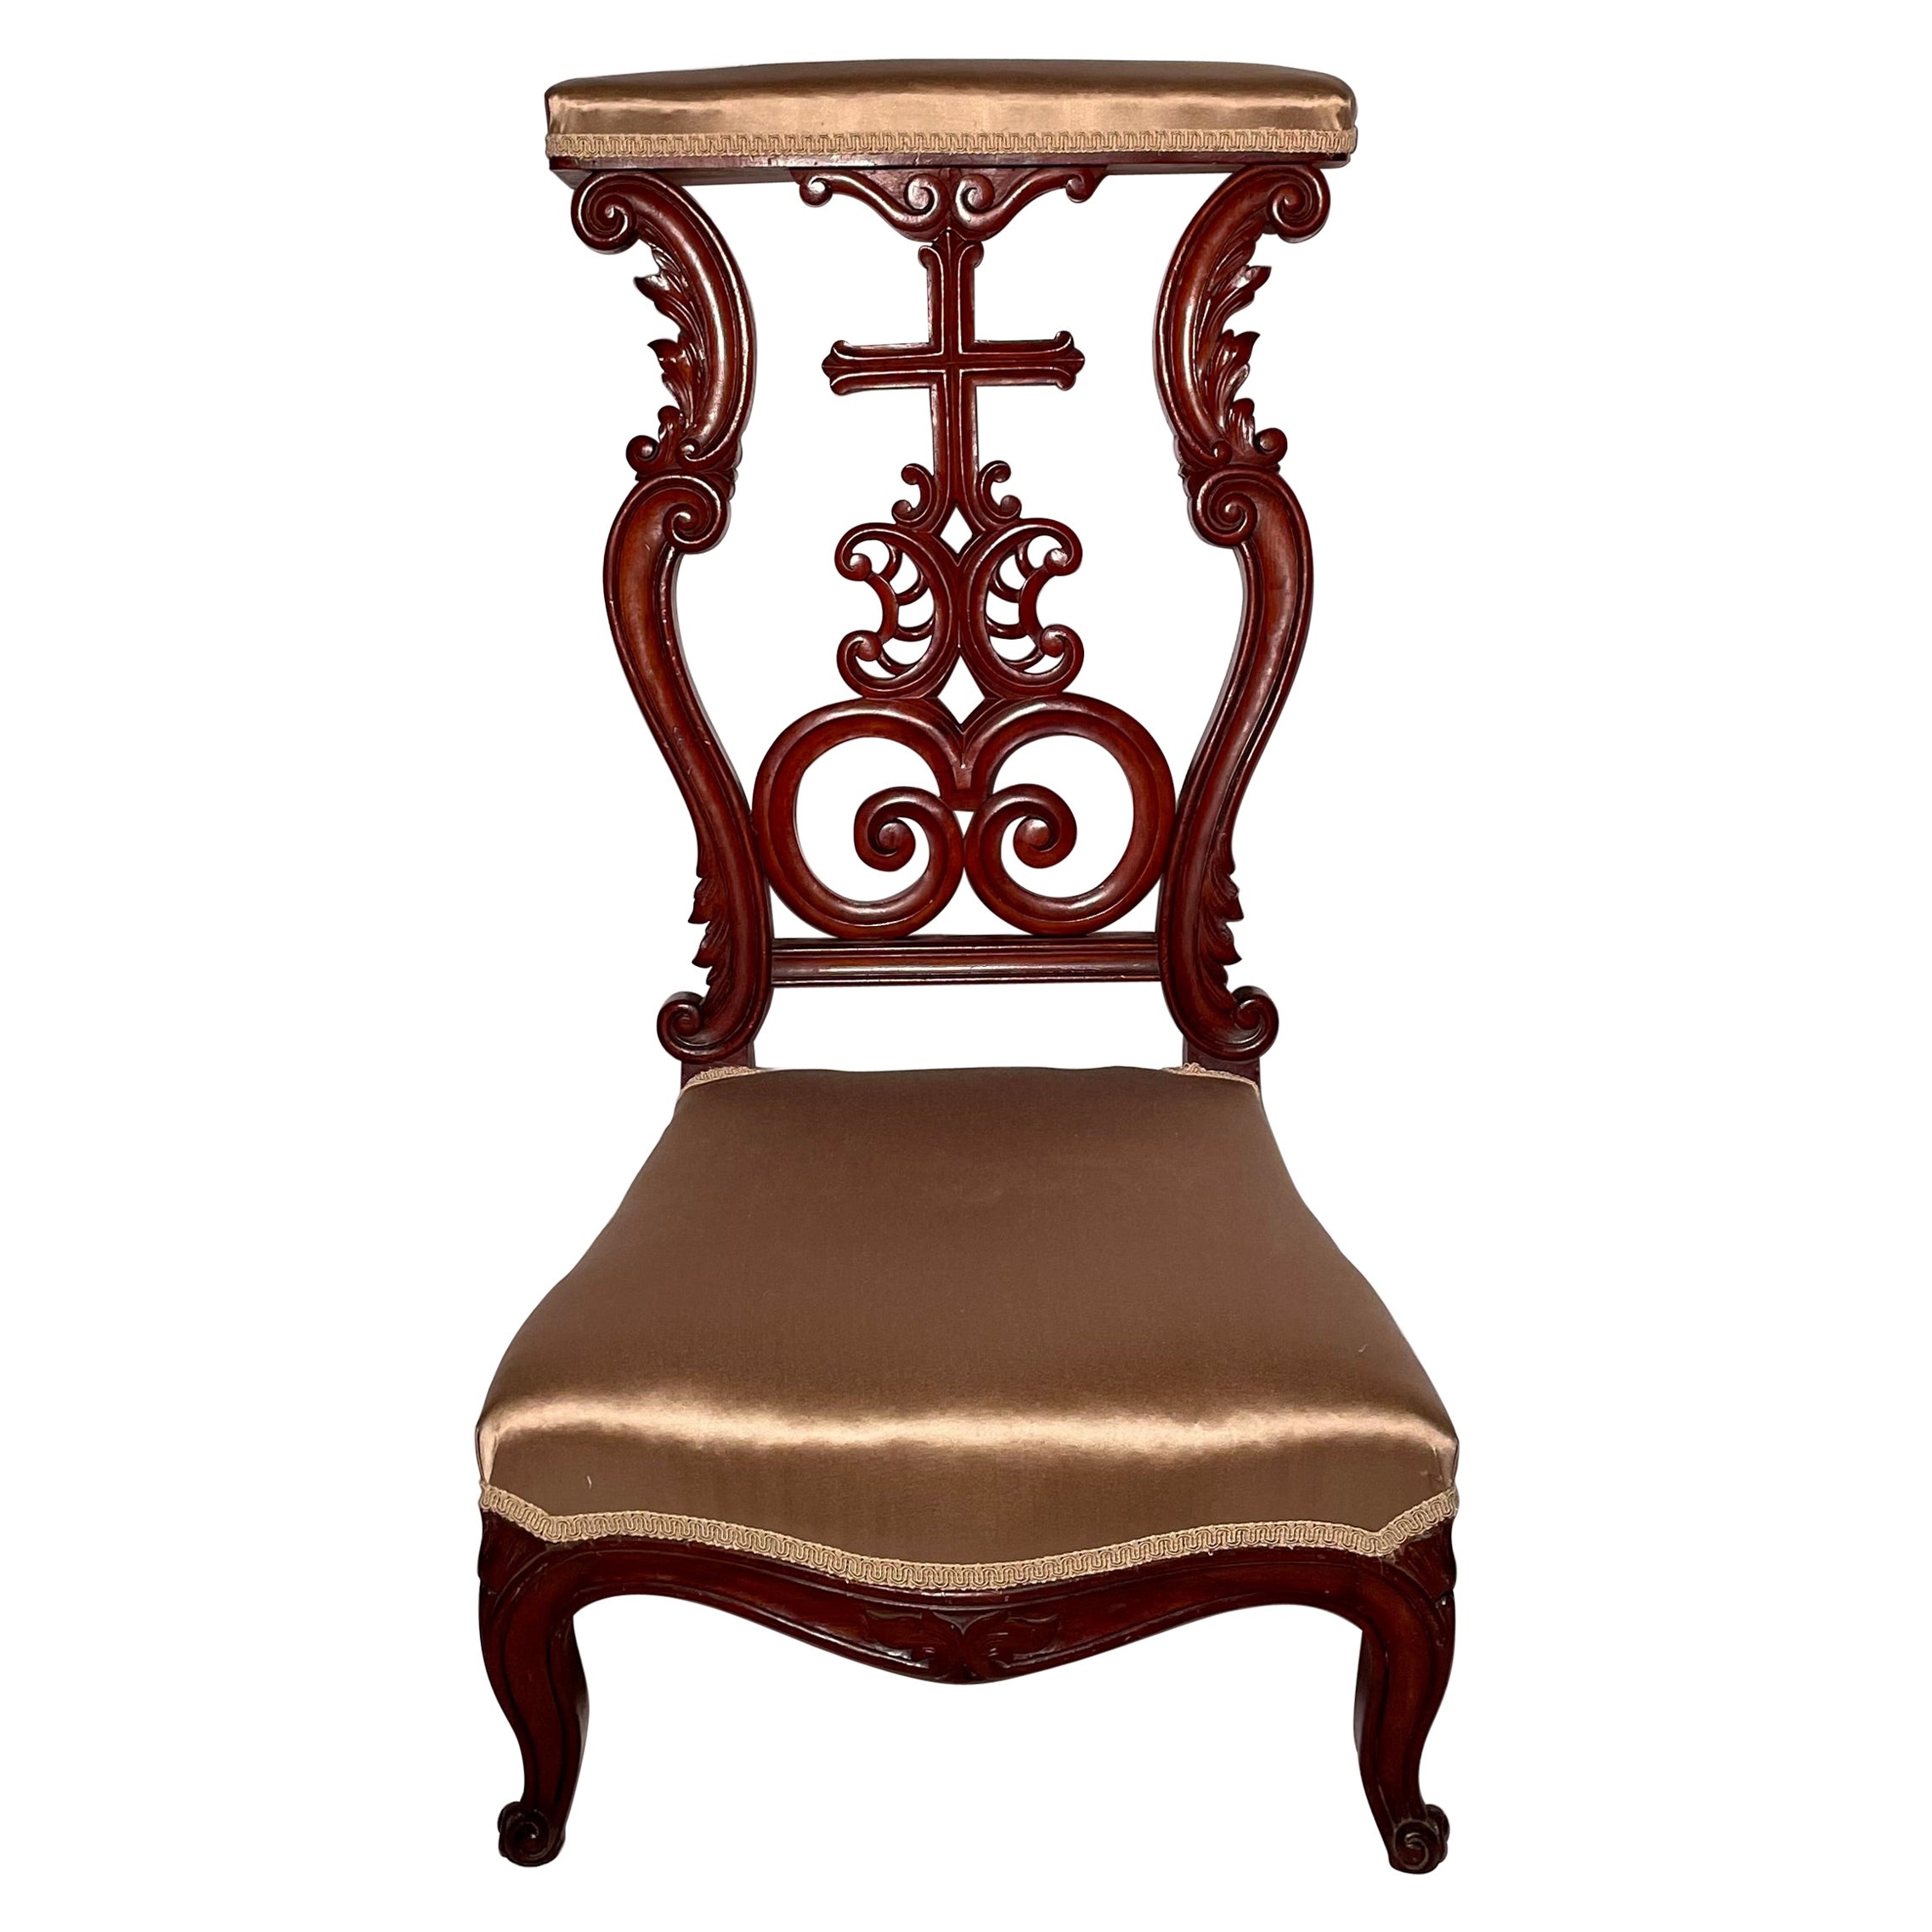 Antique French Carved Walnut "Prie Dieu" or Prayer Chair, Circa 1880.